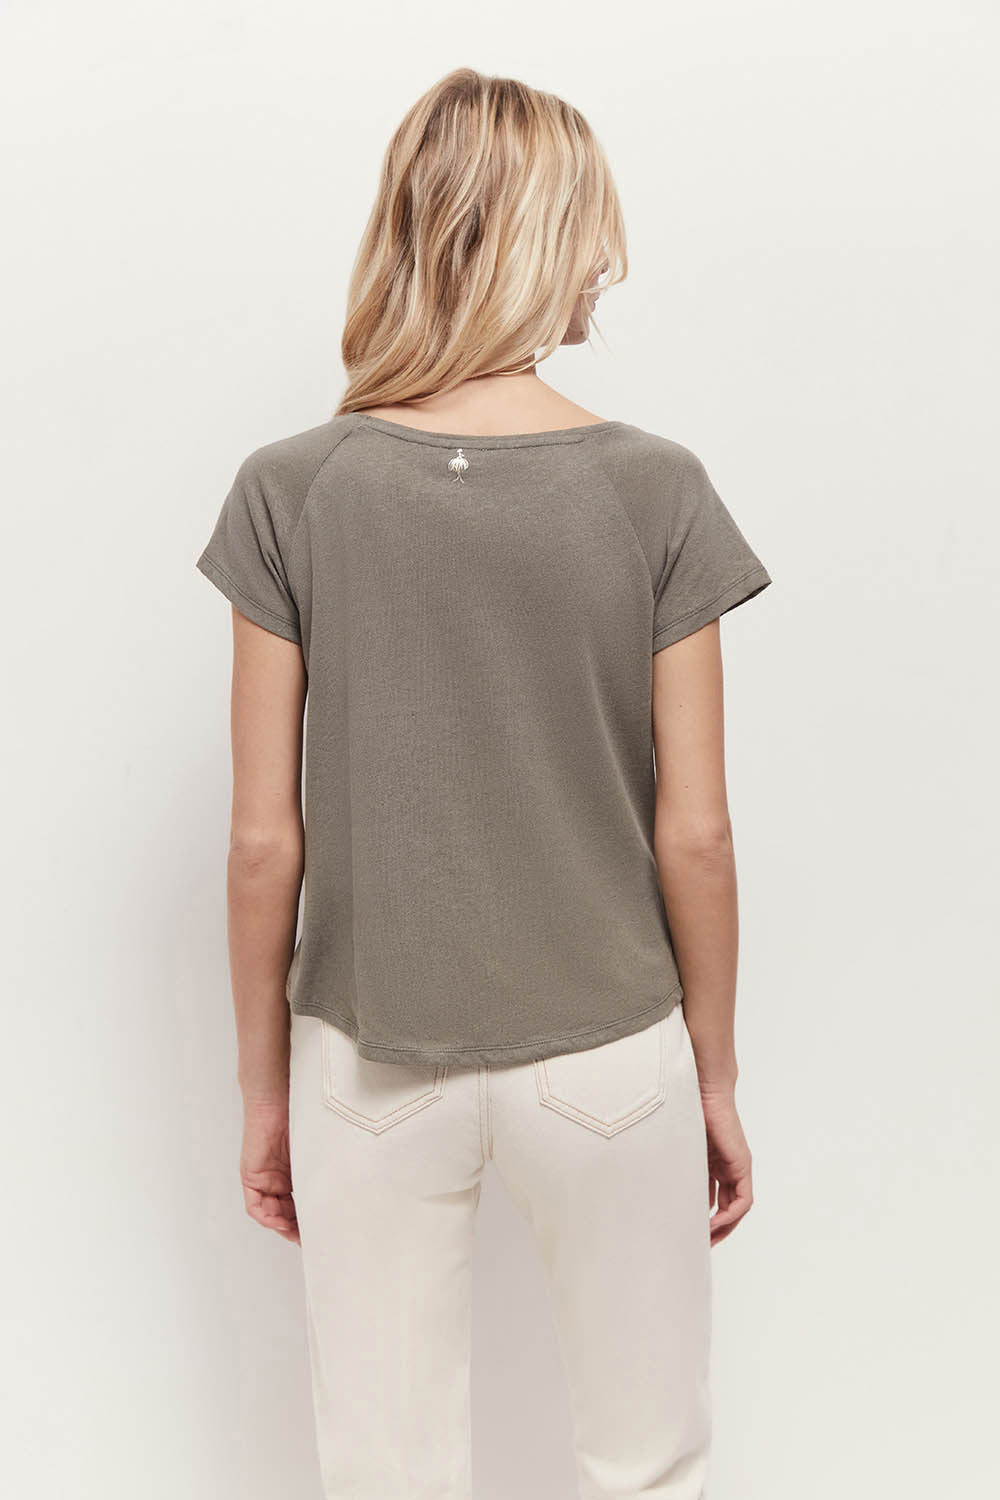 MILAN - T-shirt vétiver coton lin sérigraphie futuriste